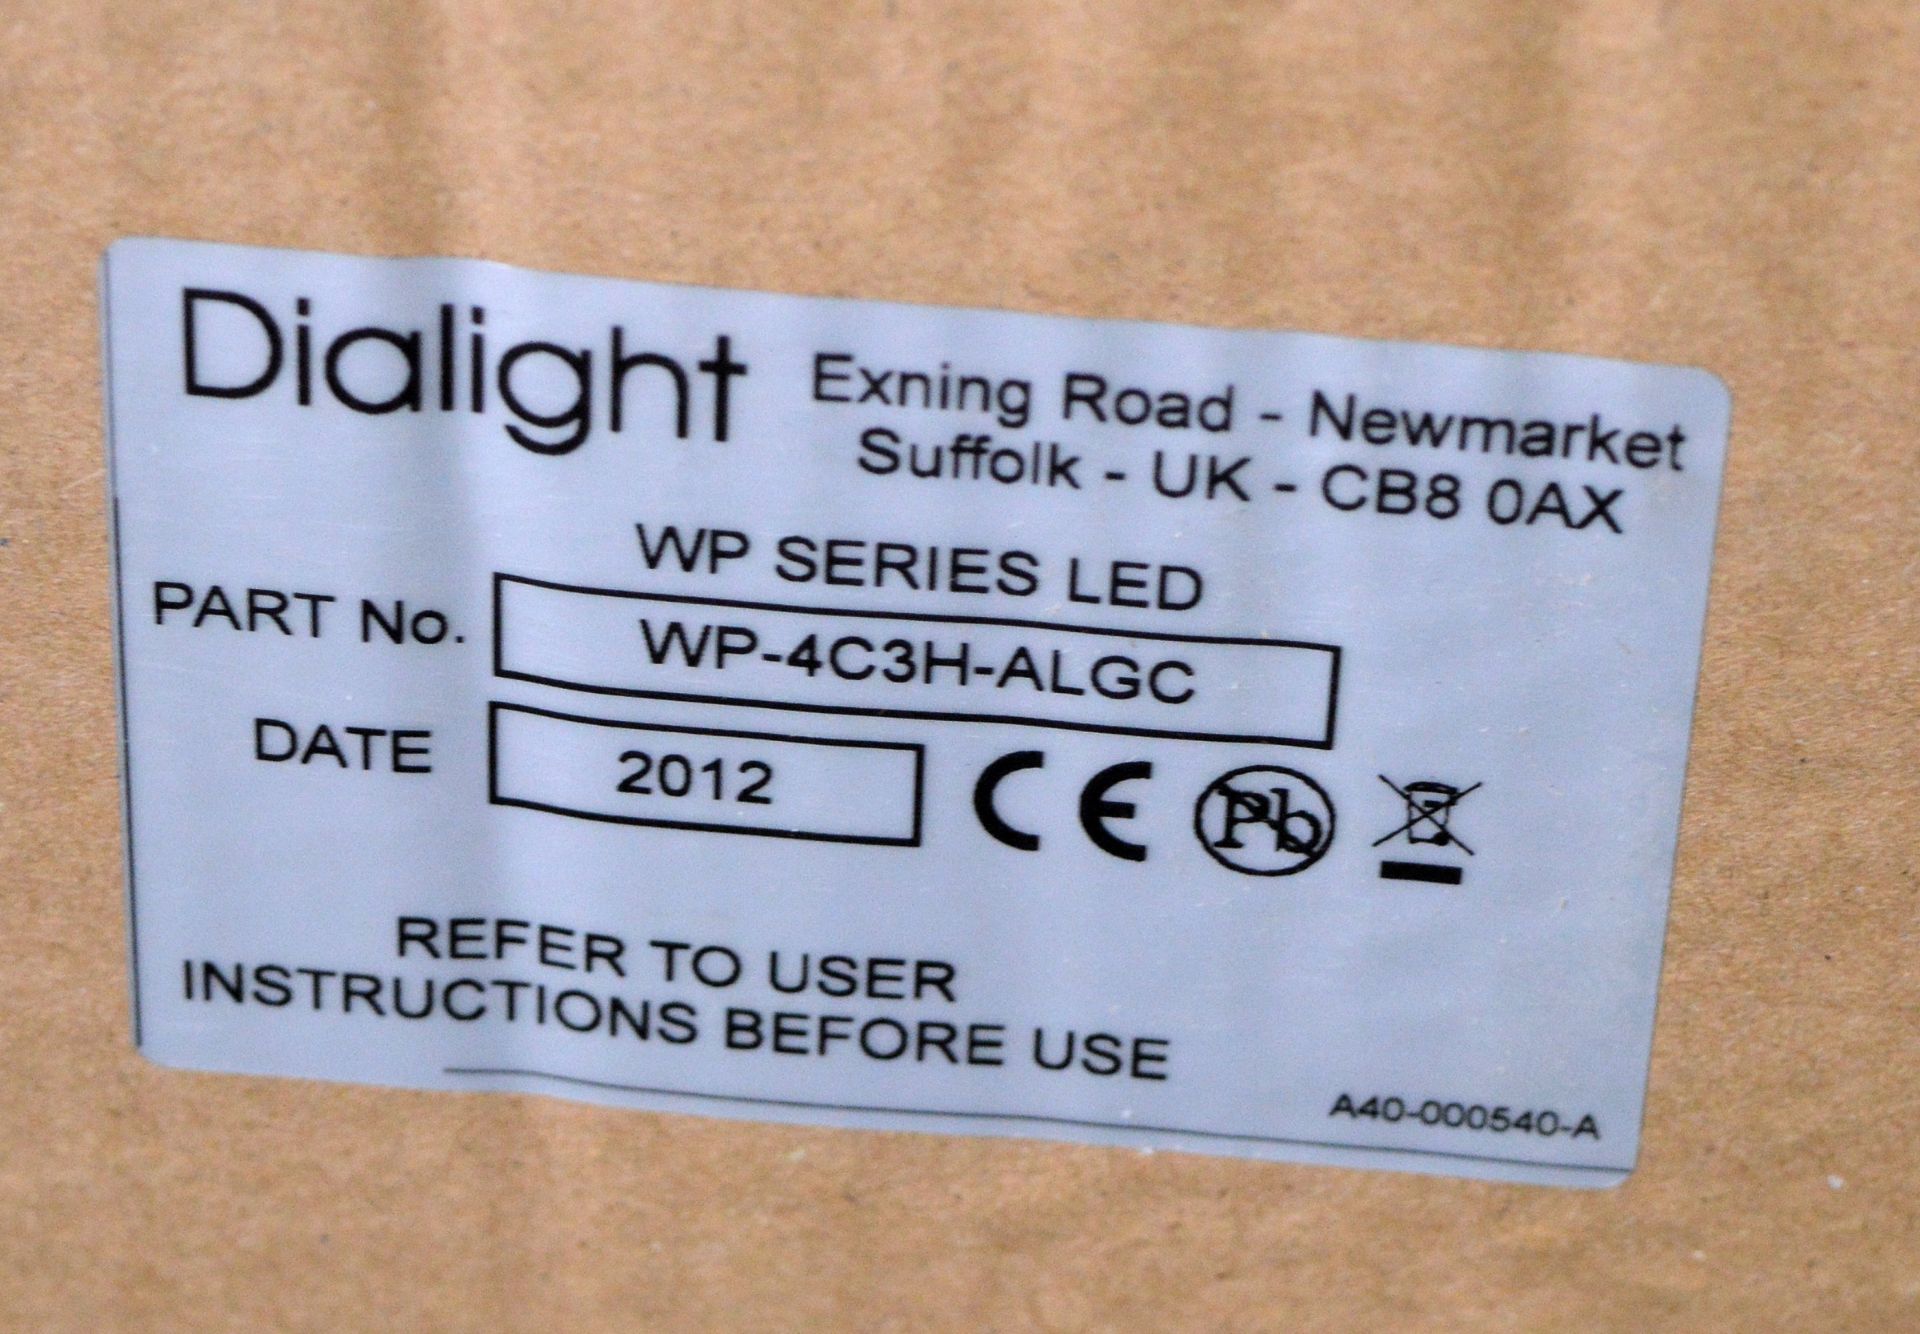 2x Dialight LED Light - Part No WP-2C3H-ALGC with brackets - Image 2 of 2